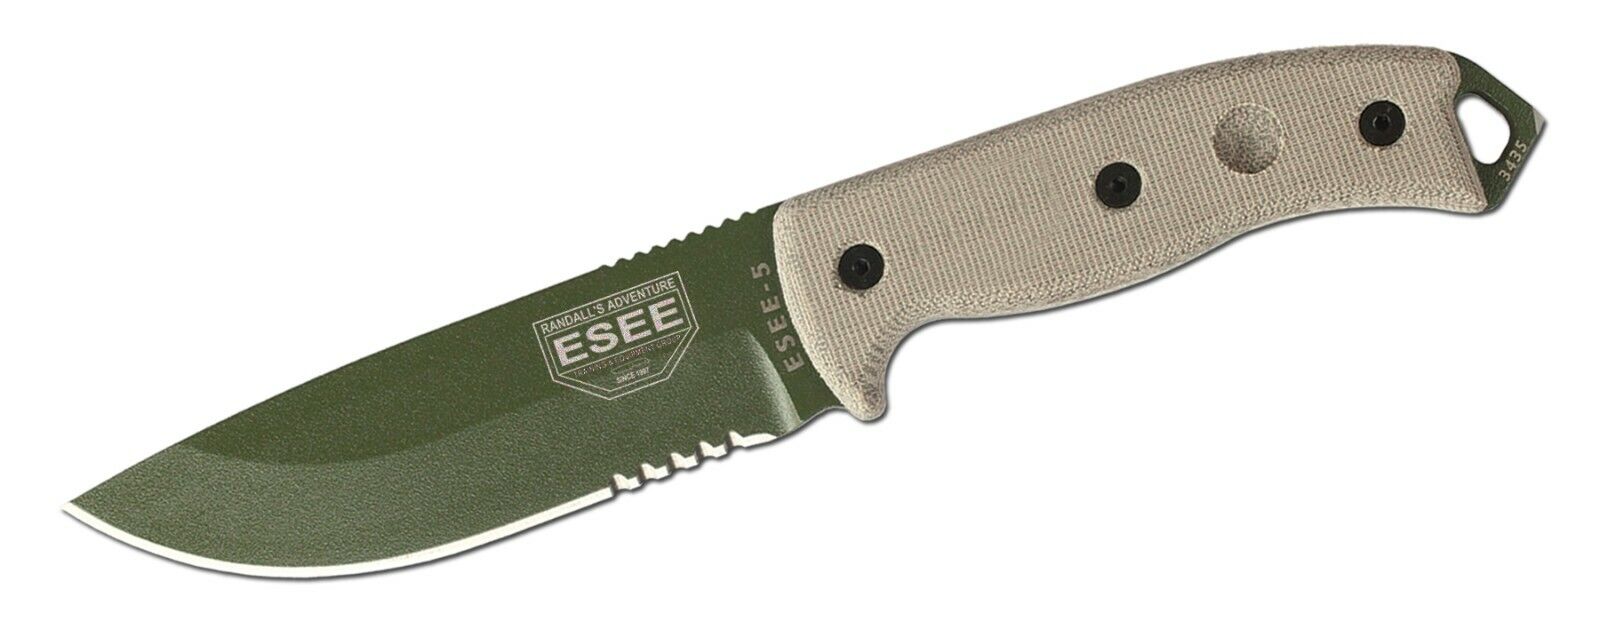 ESEE Model 5 Olive Drab Plain Edge Blade With Micarta Handle 5P-KO-OD 5P-KO-OD-E